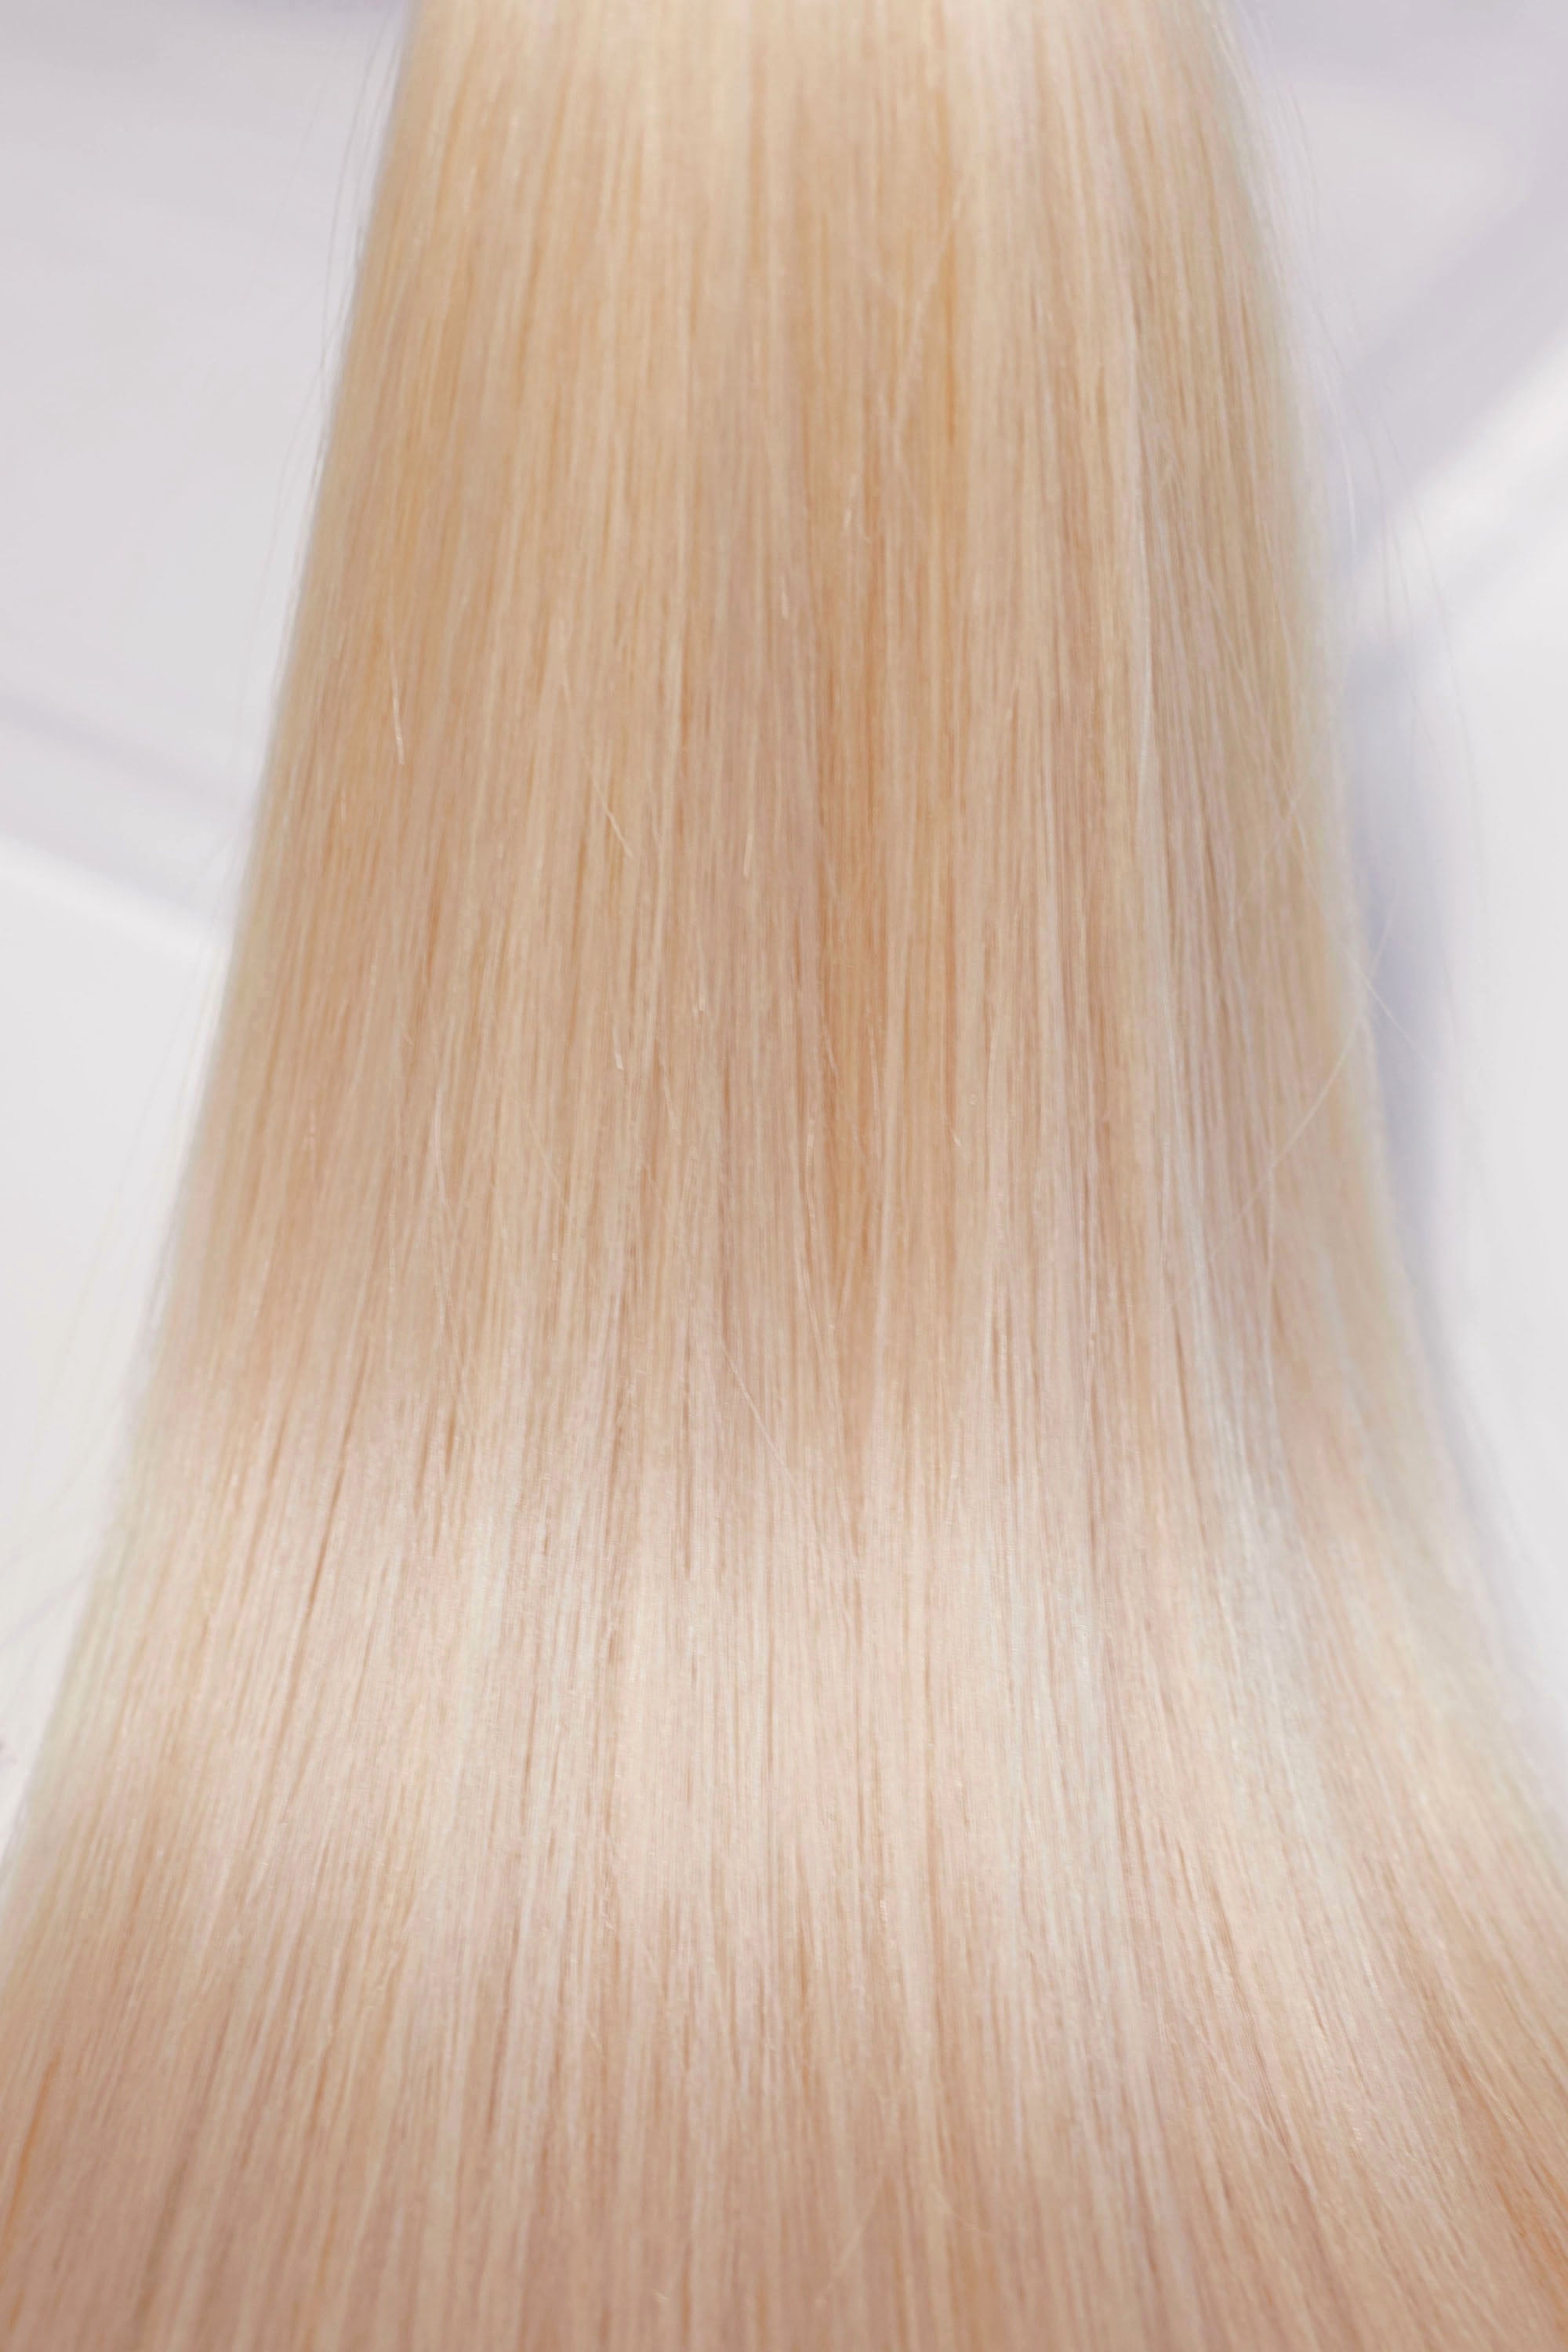 Behair professional Keratin Tip "Premium" 24" (60cm) Natural Straight Platinum Blond #60 - 25g (Standart - 0.7g each pcs) hair extensions